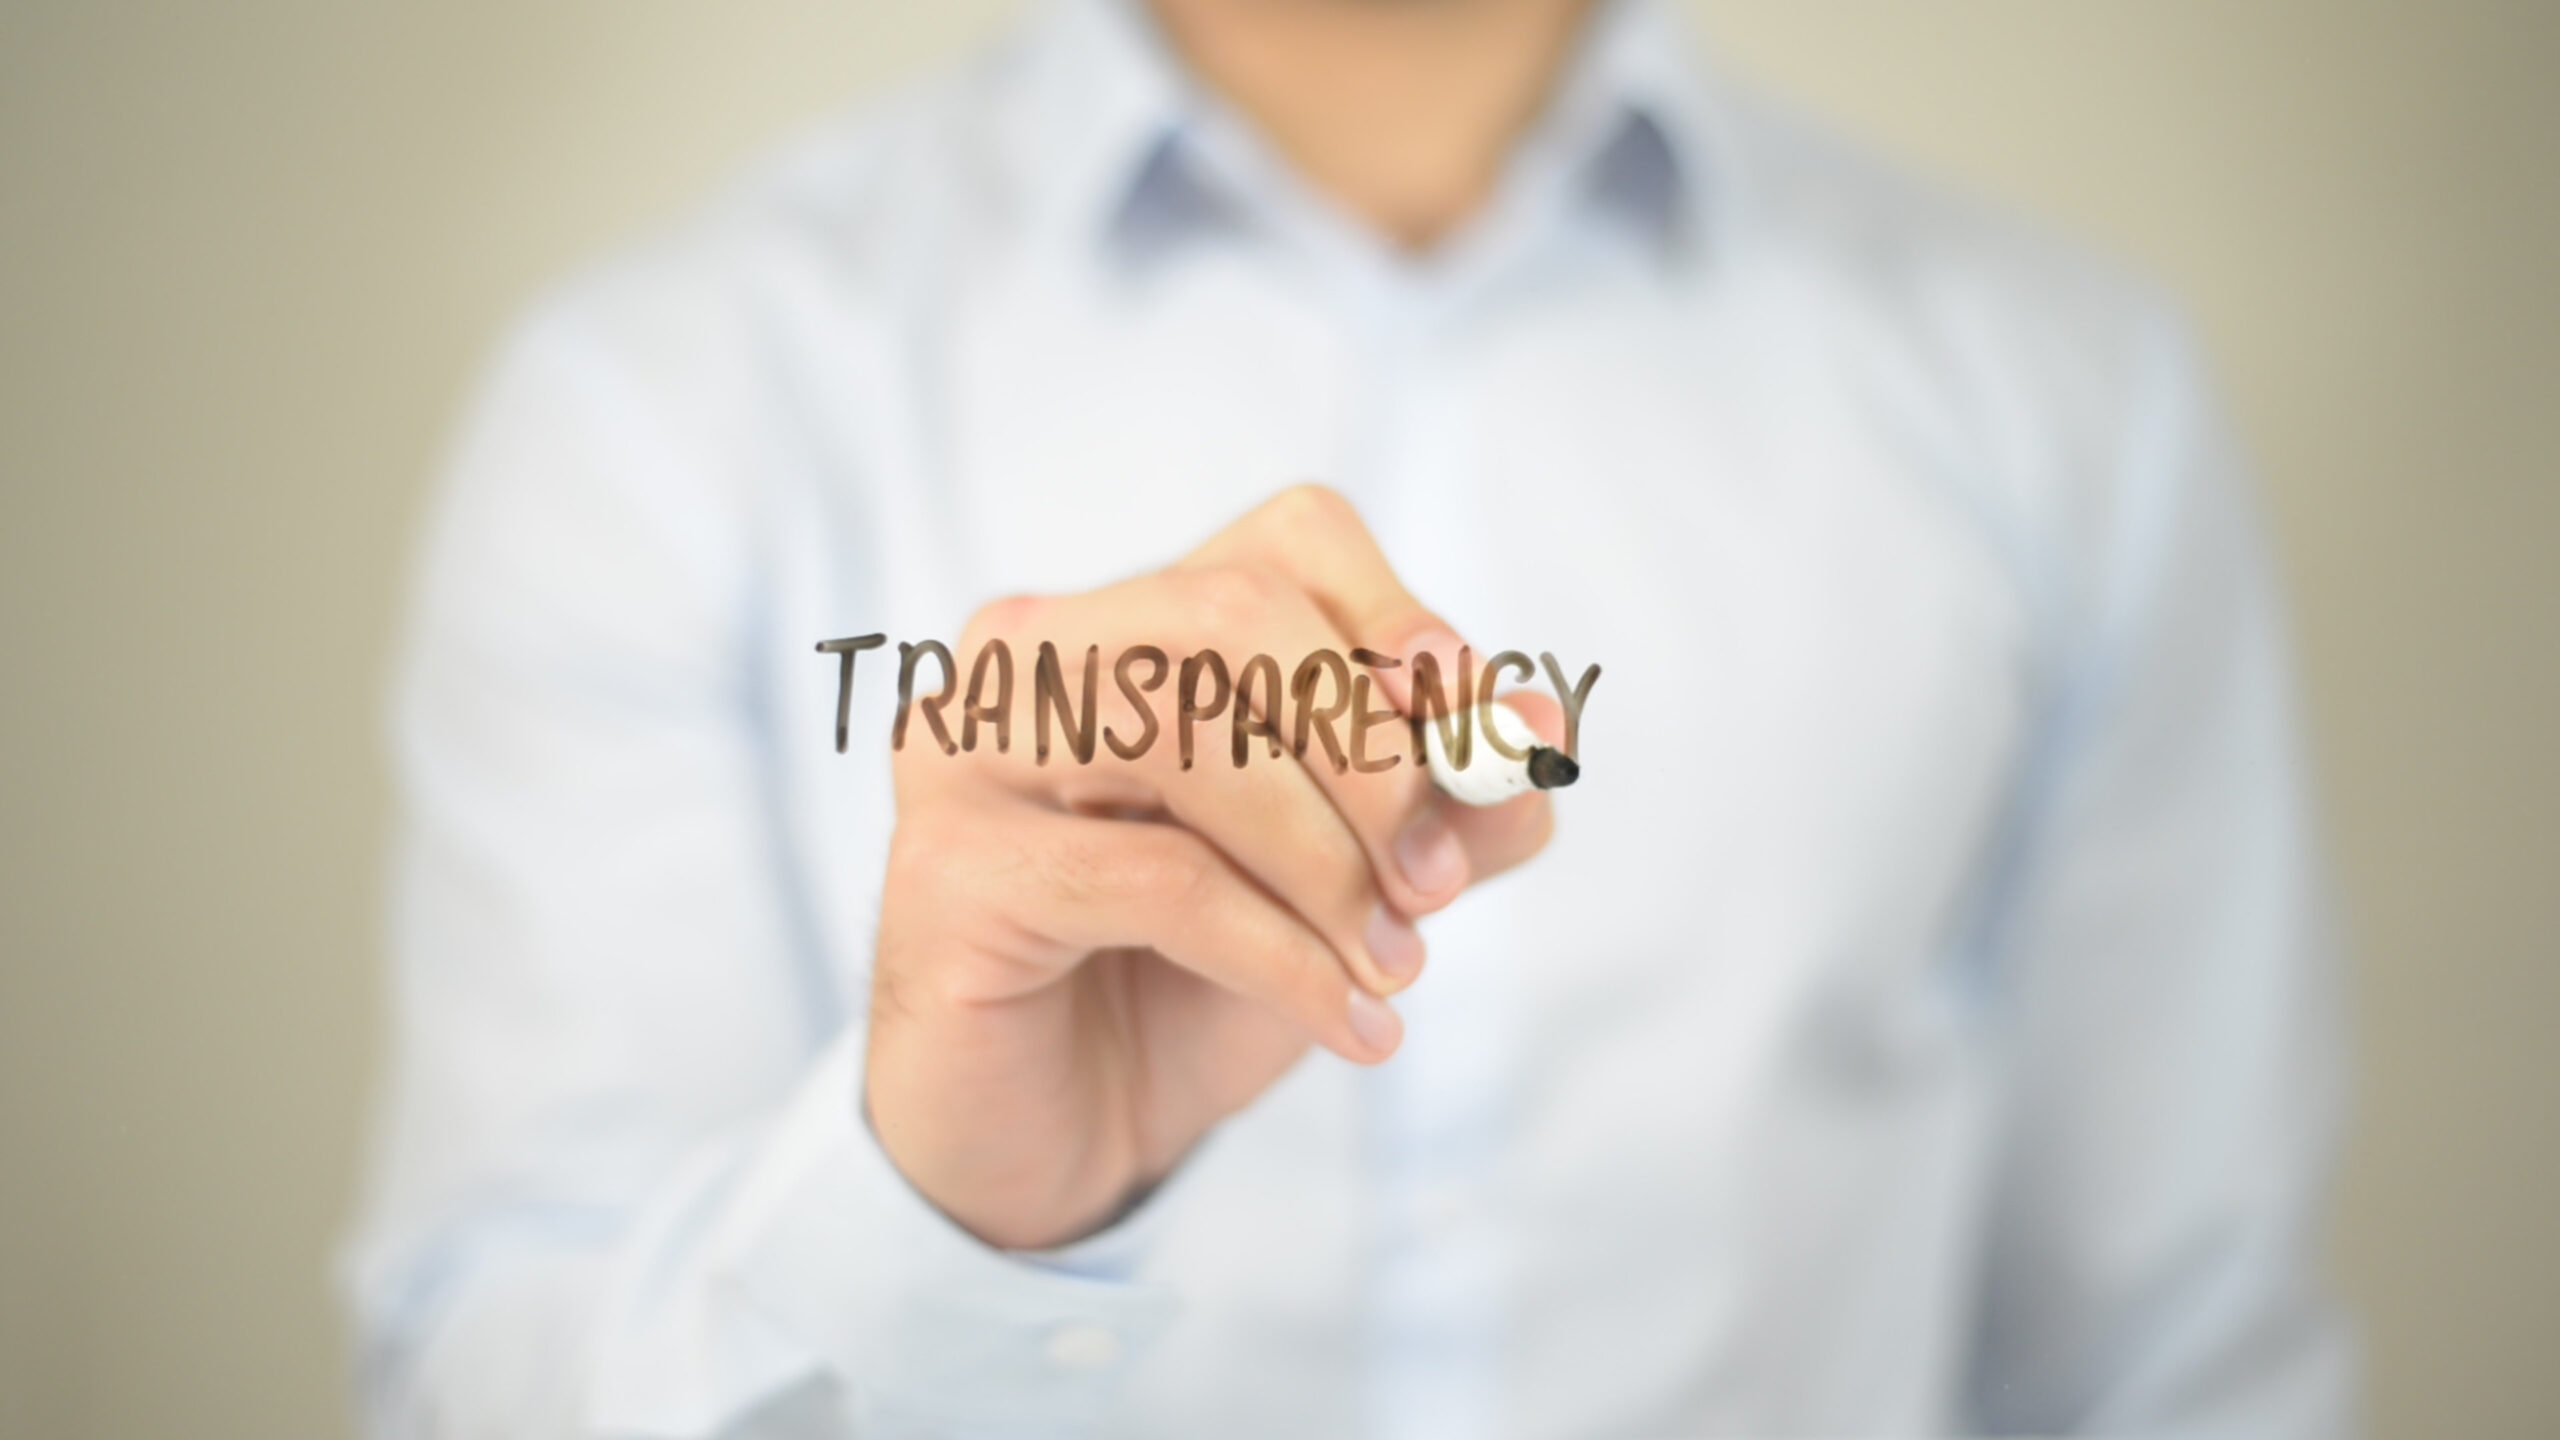 Create A Culture Of Transparency